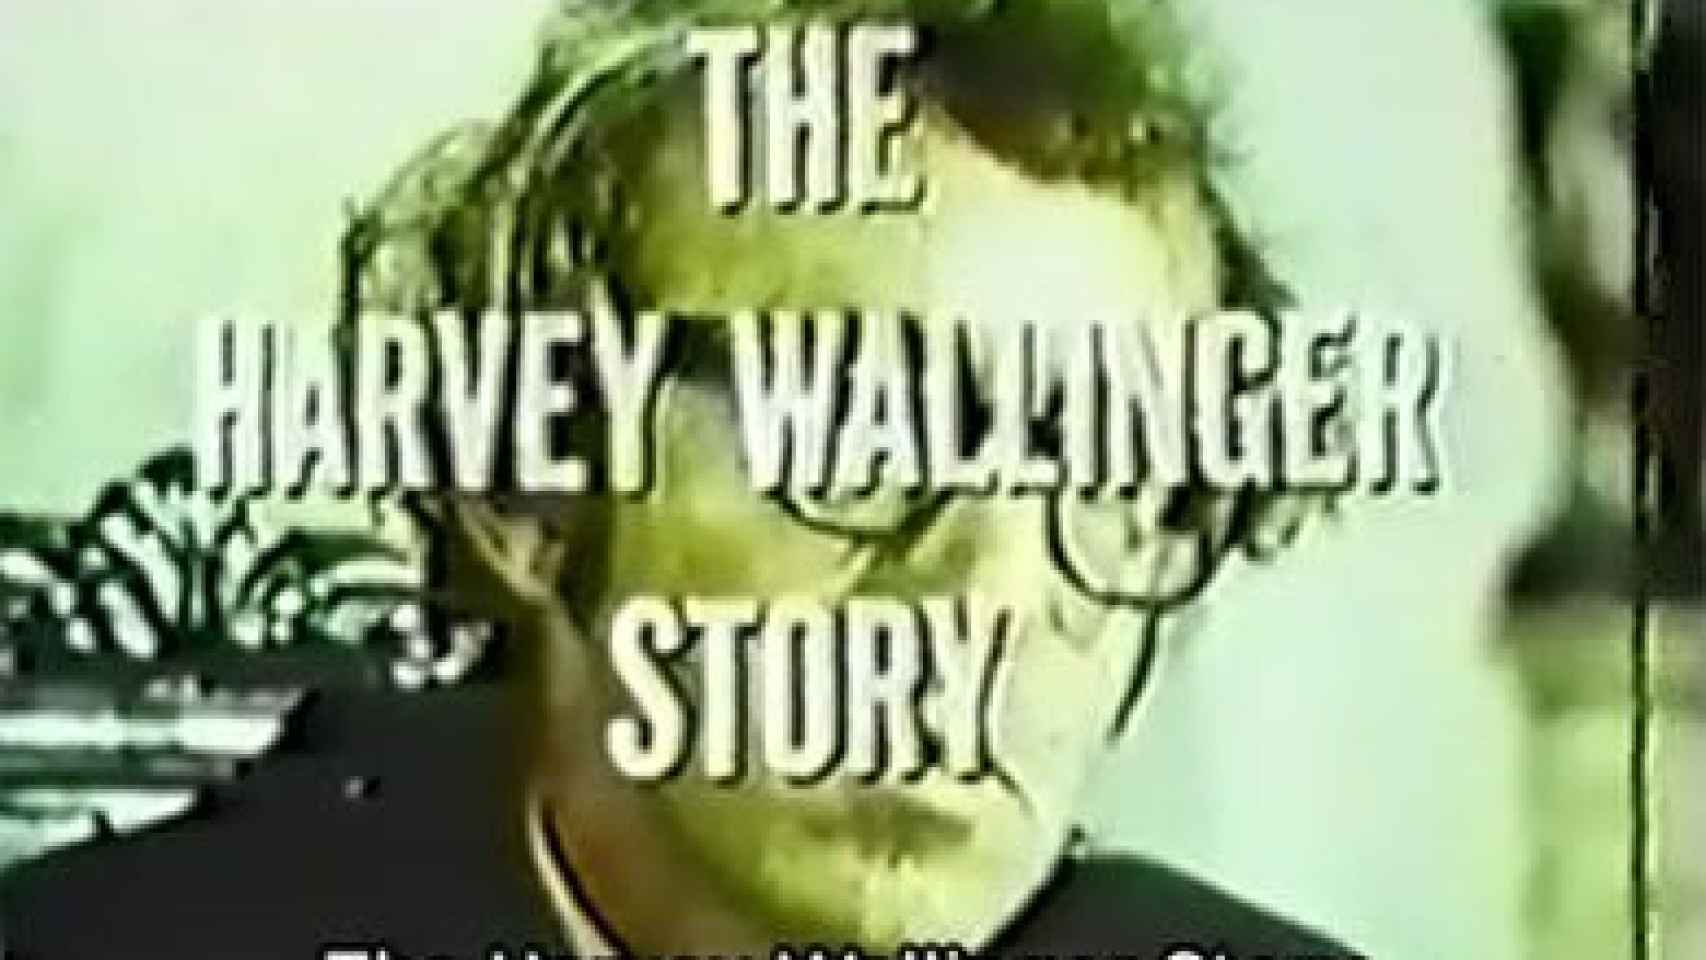 'Men of crisis: The Harvey Wallinger Story'